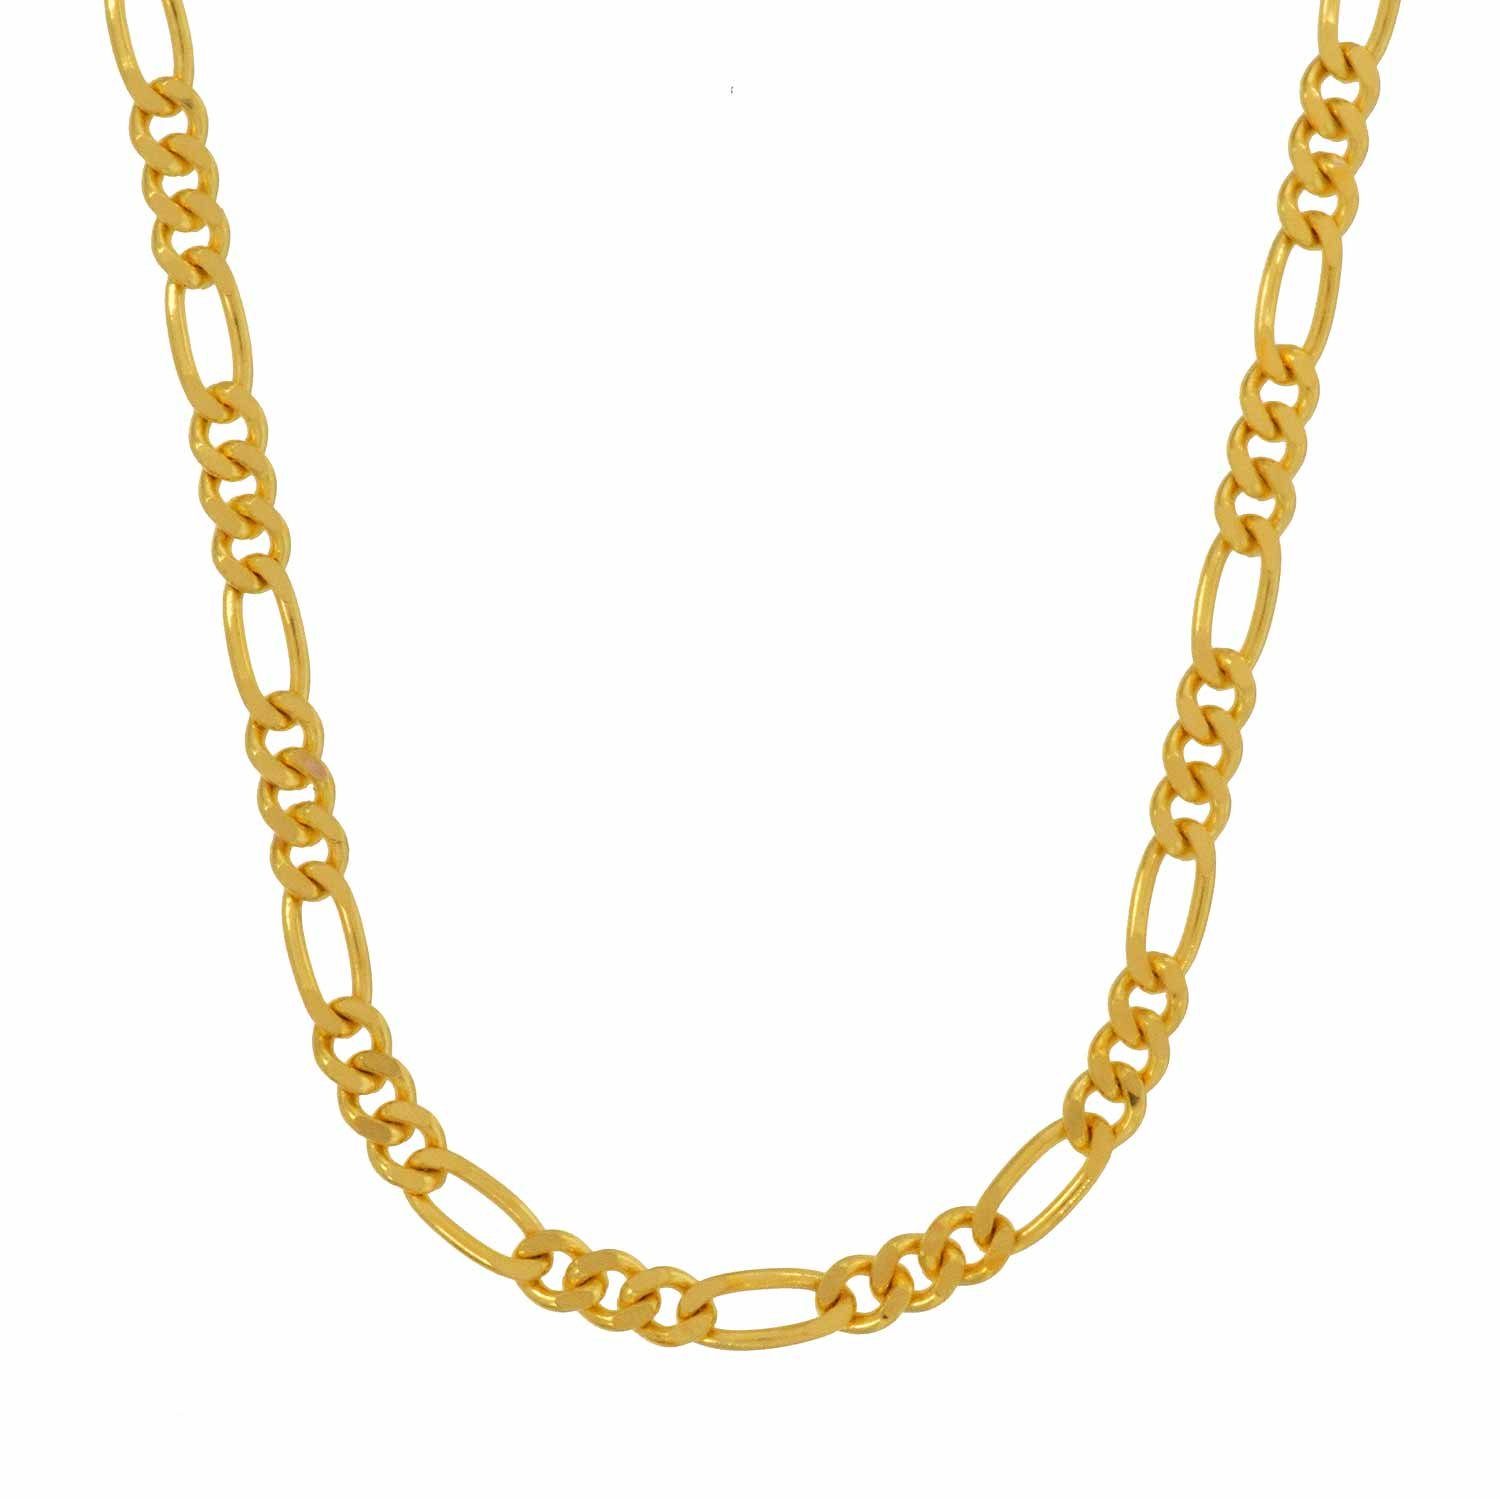 HOPLO Goldkette Figarokette 585 - 14 Karat Gold 2,2 mm 38 cm Halskette  Goldkette, Made in Germany